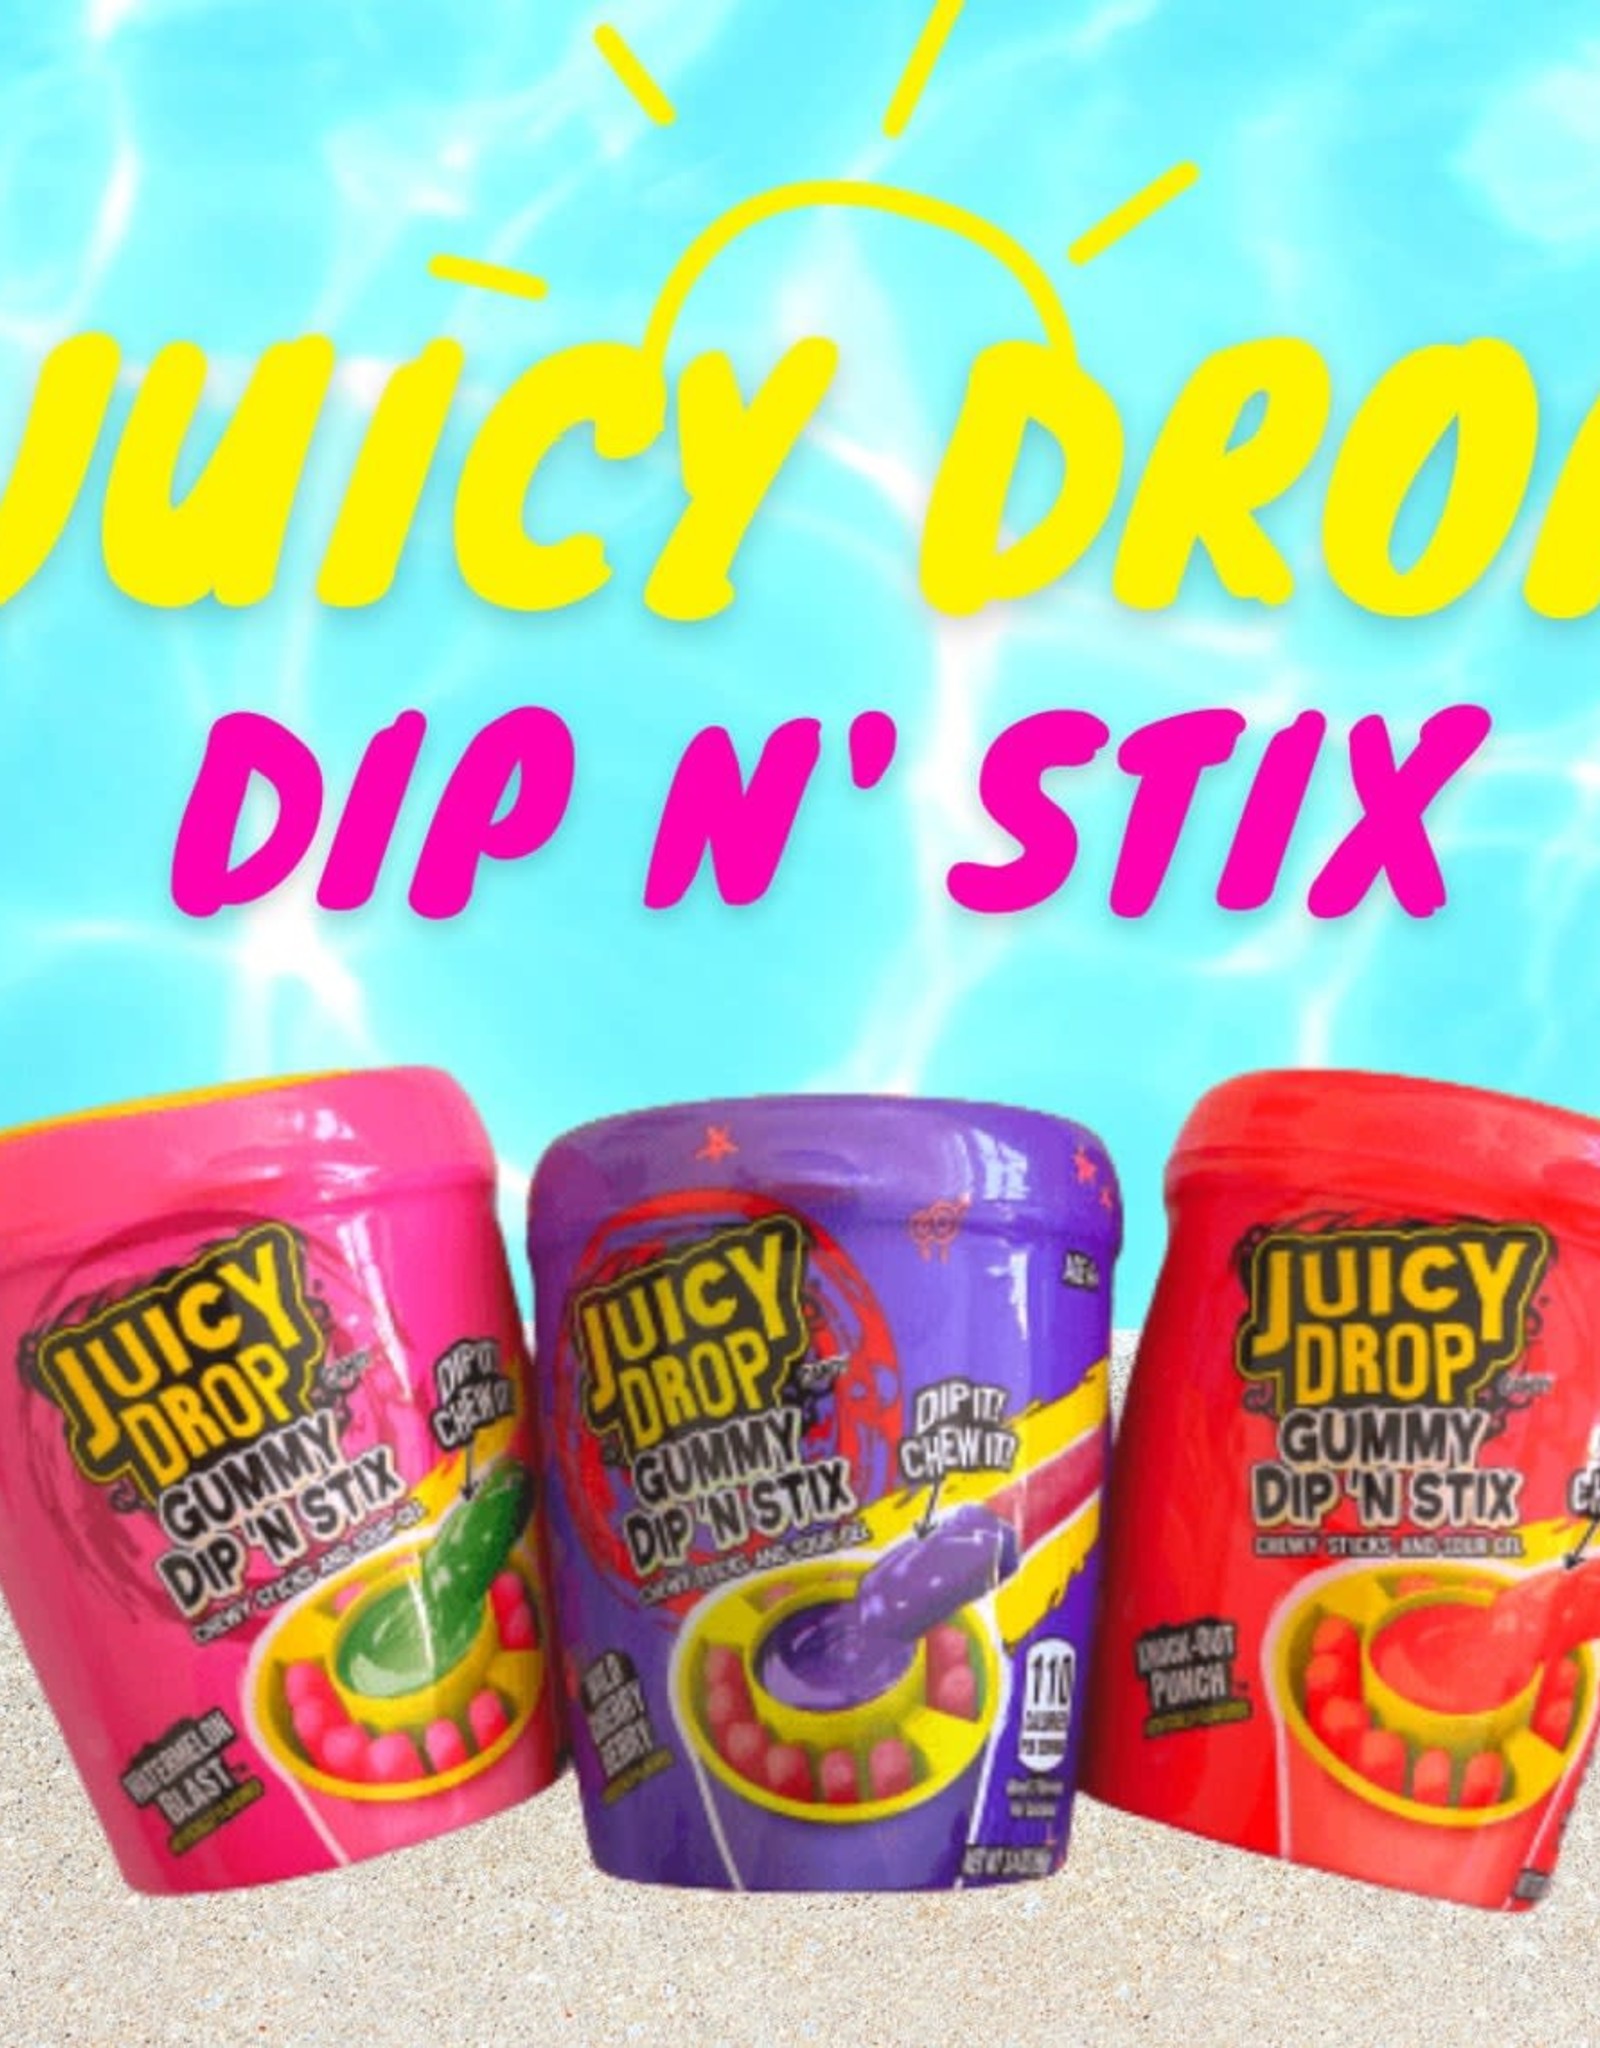 Juicy Drop gummy Dip N Stix